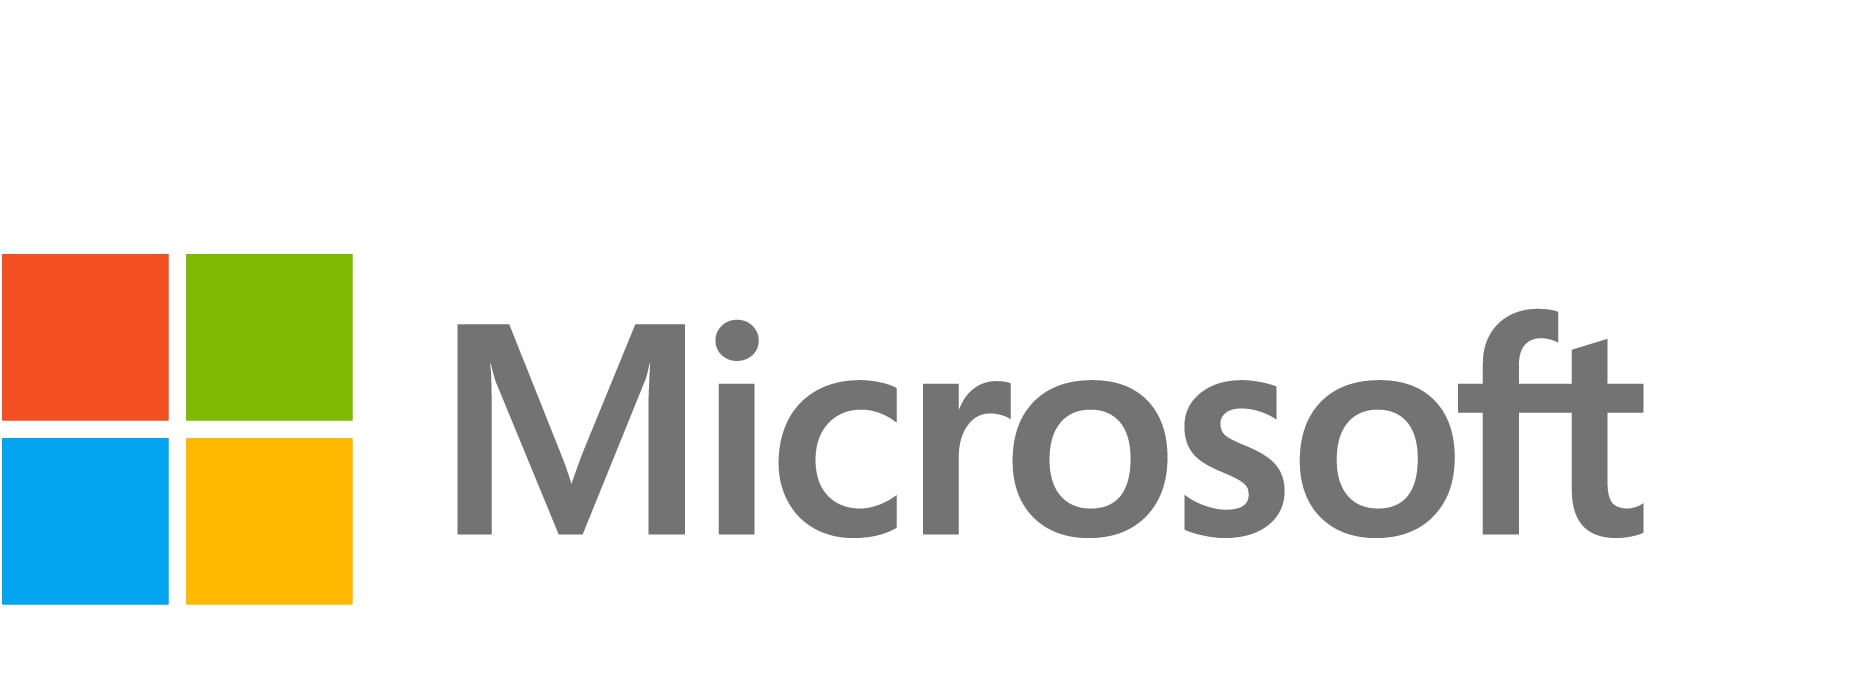 Microsoft Excel LTSC 2021 - license - 1 license